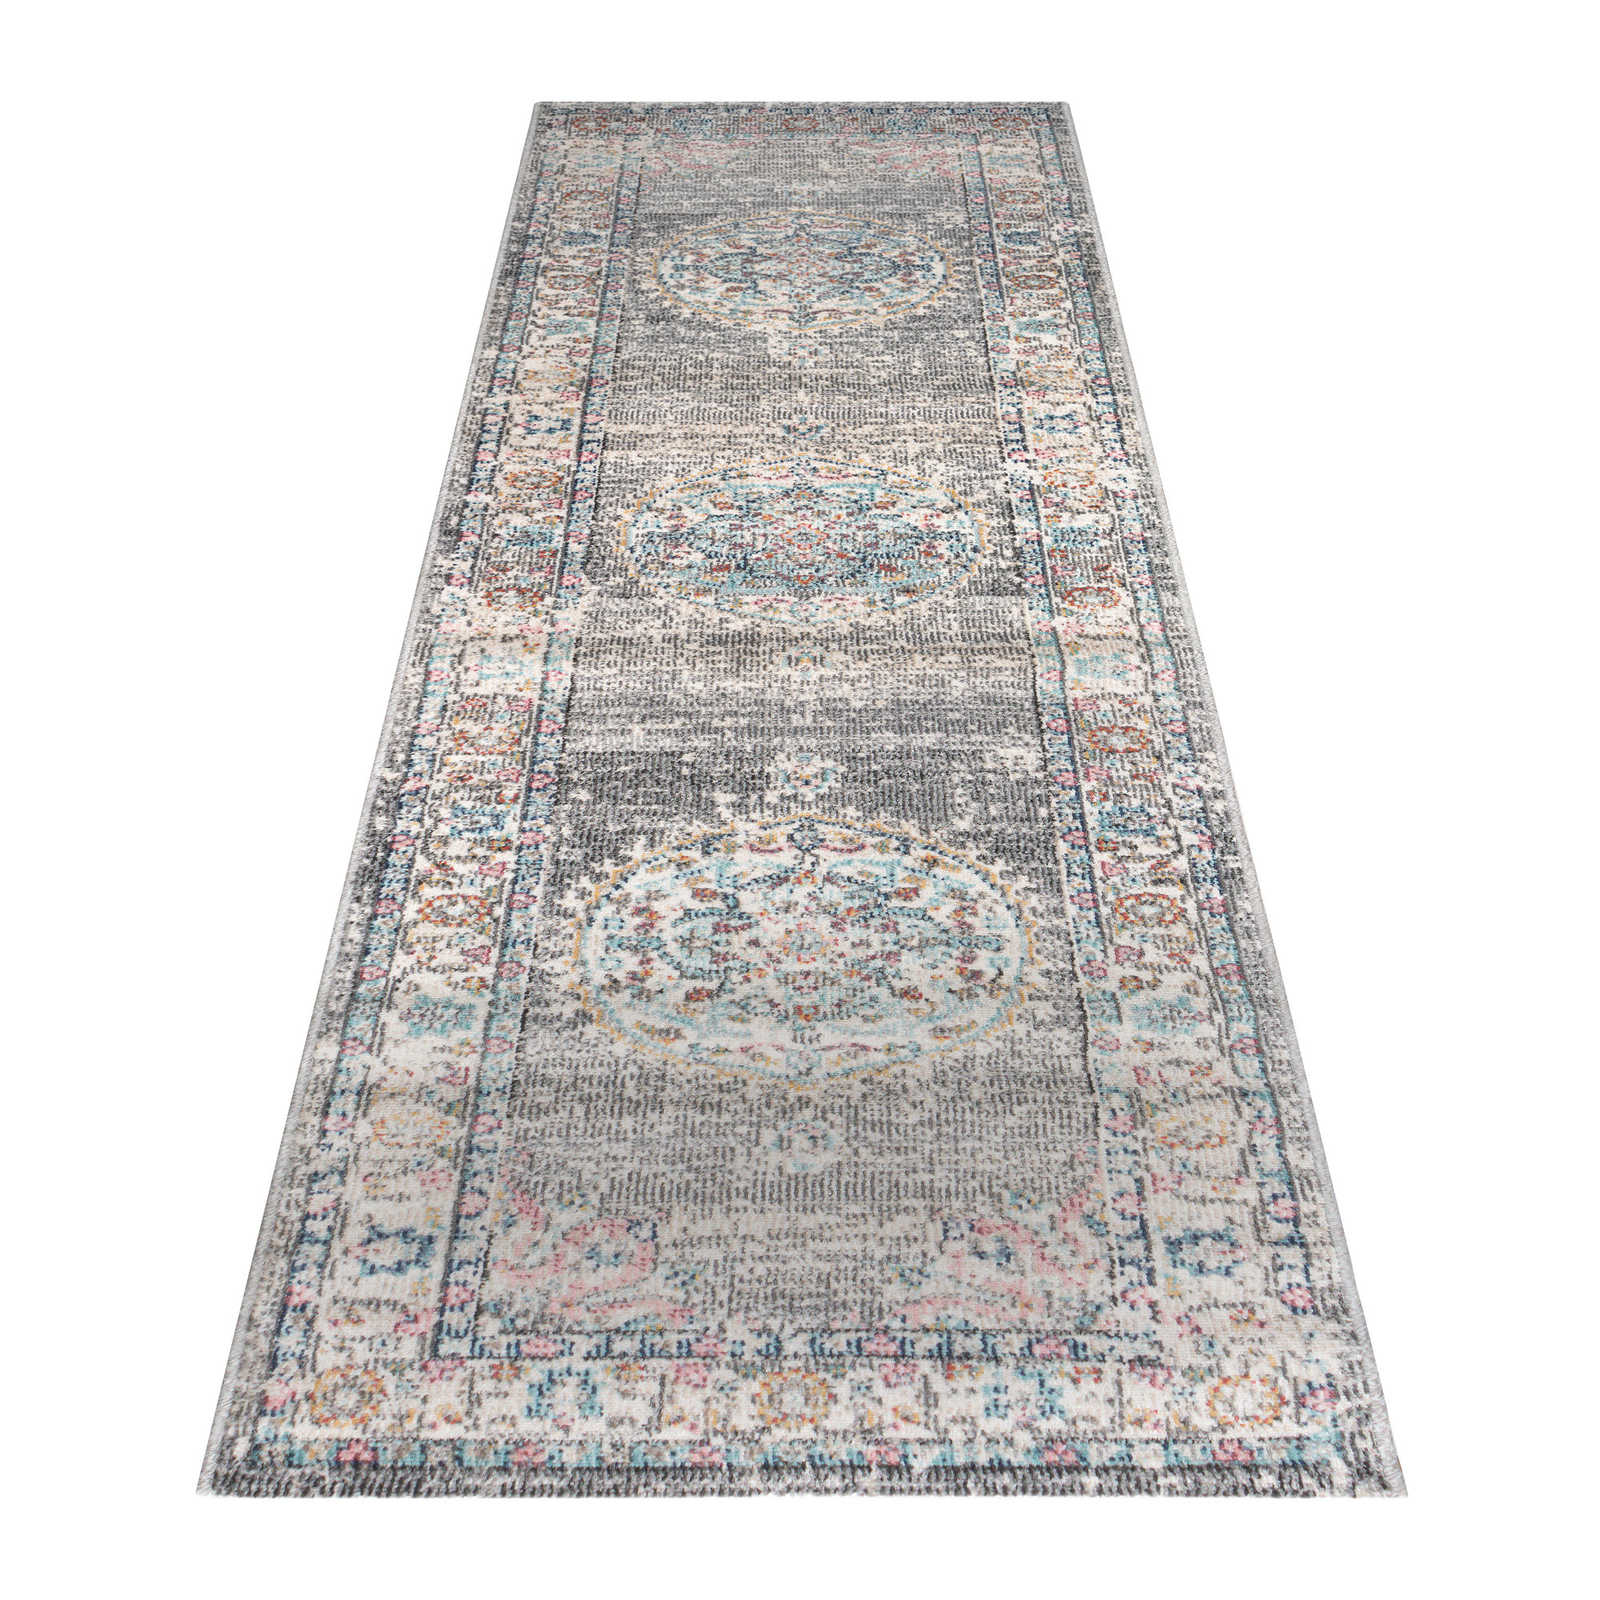 Grey flatweave carpet as runner - 300 x 80 cm
